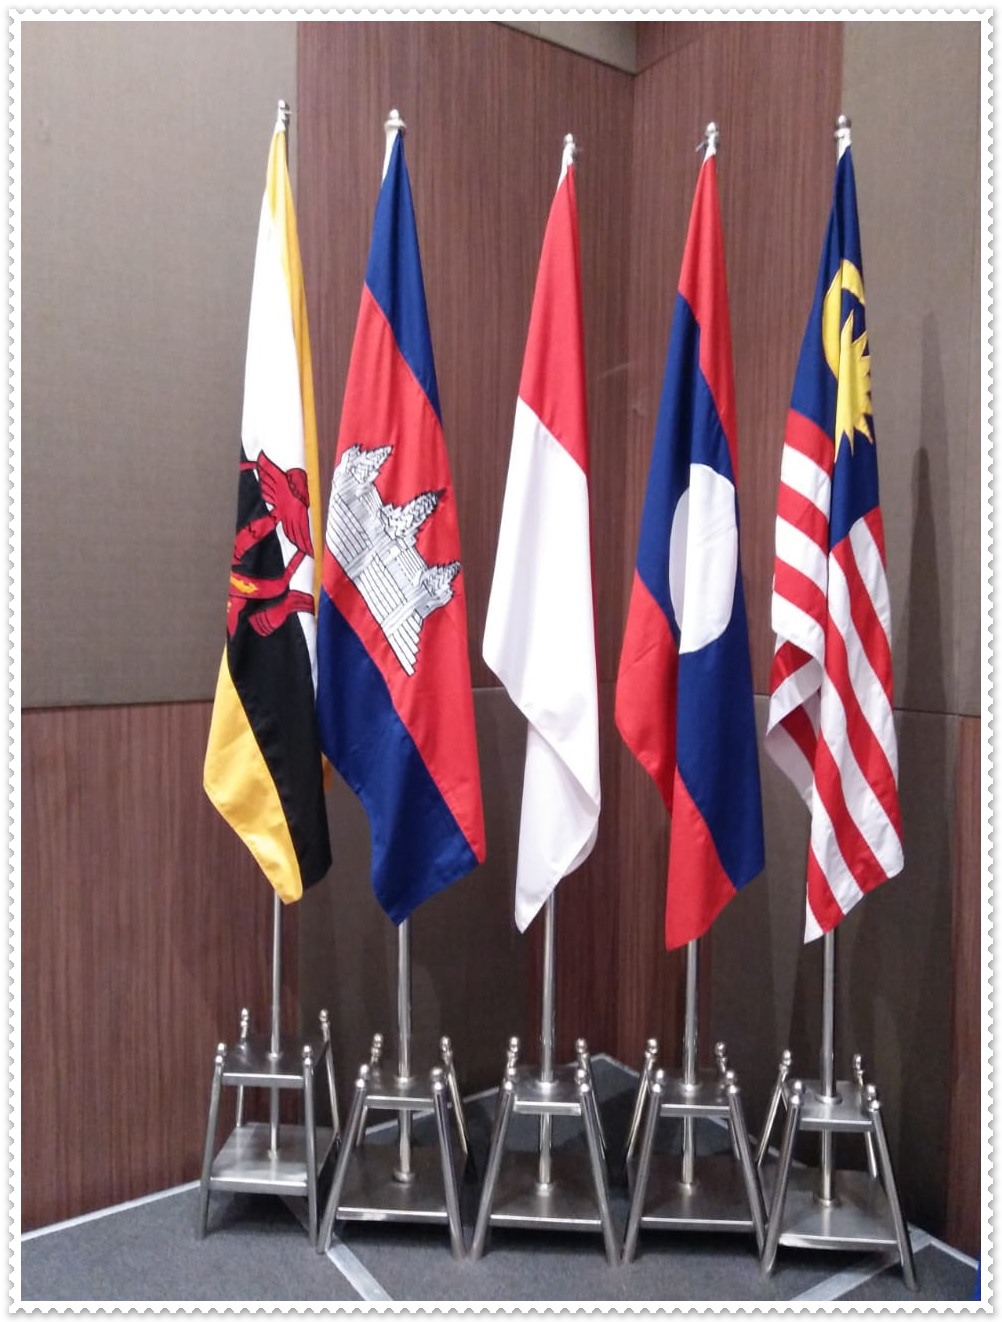 Sewa Tiang Bendera Jakarta Kualitas Terbaik